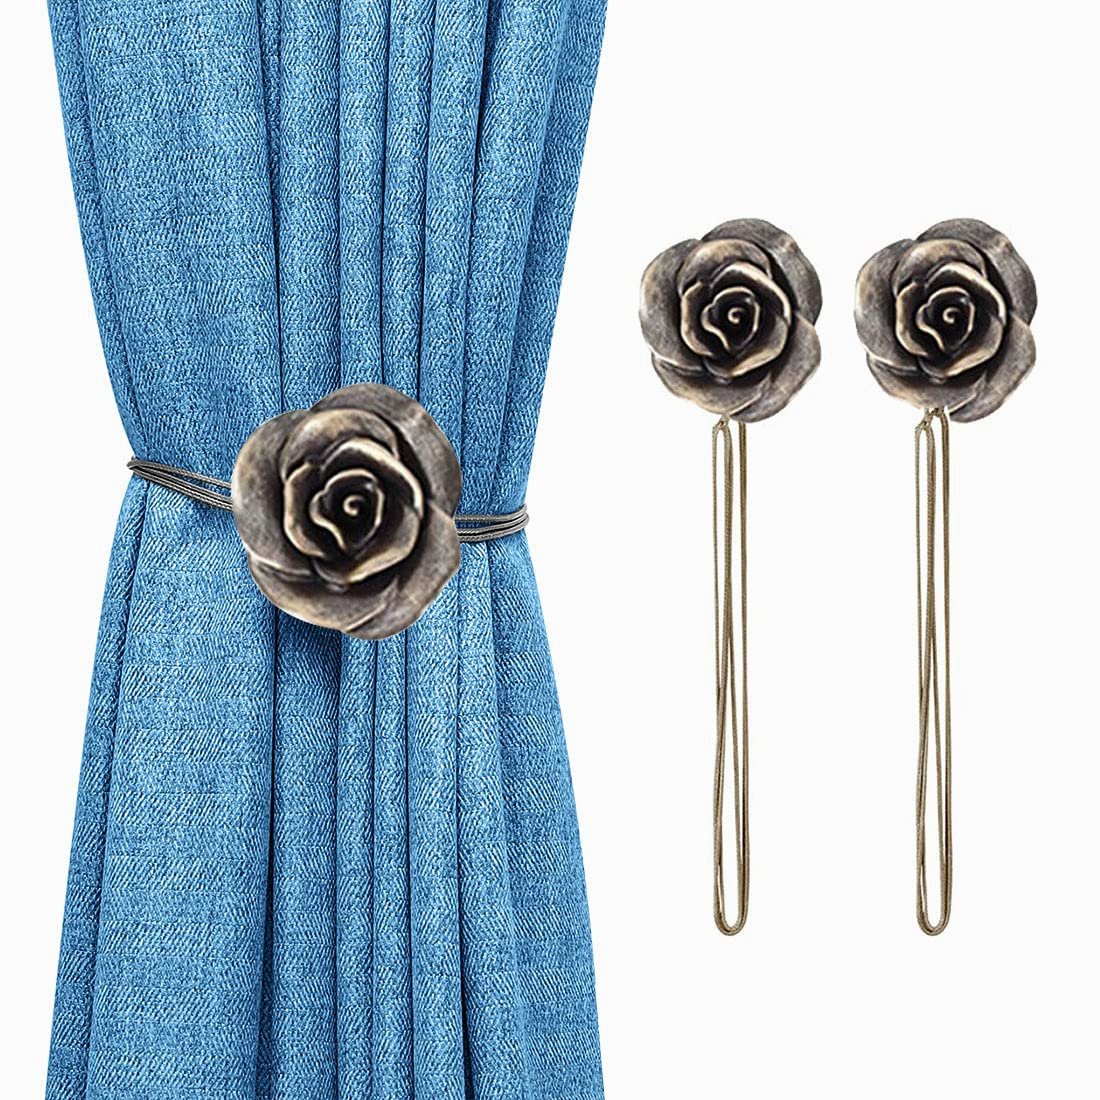 1Pair Room Window Curtain Tieback Clip-on Rose Flower Tie Holder Drape Decors